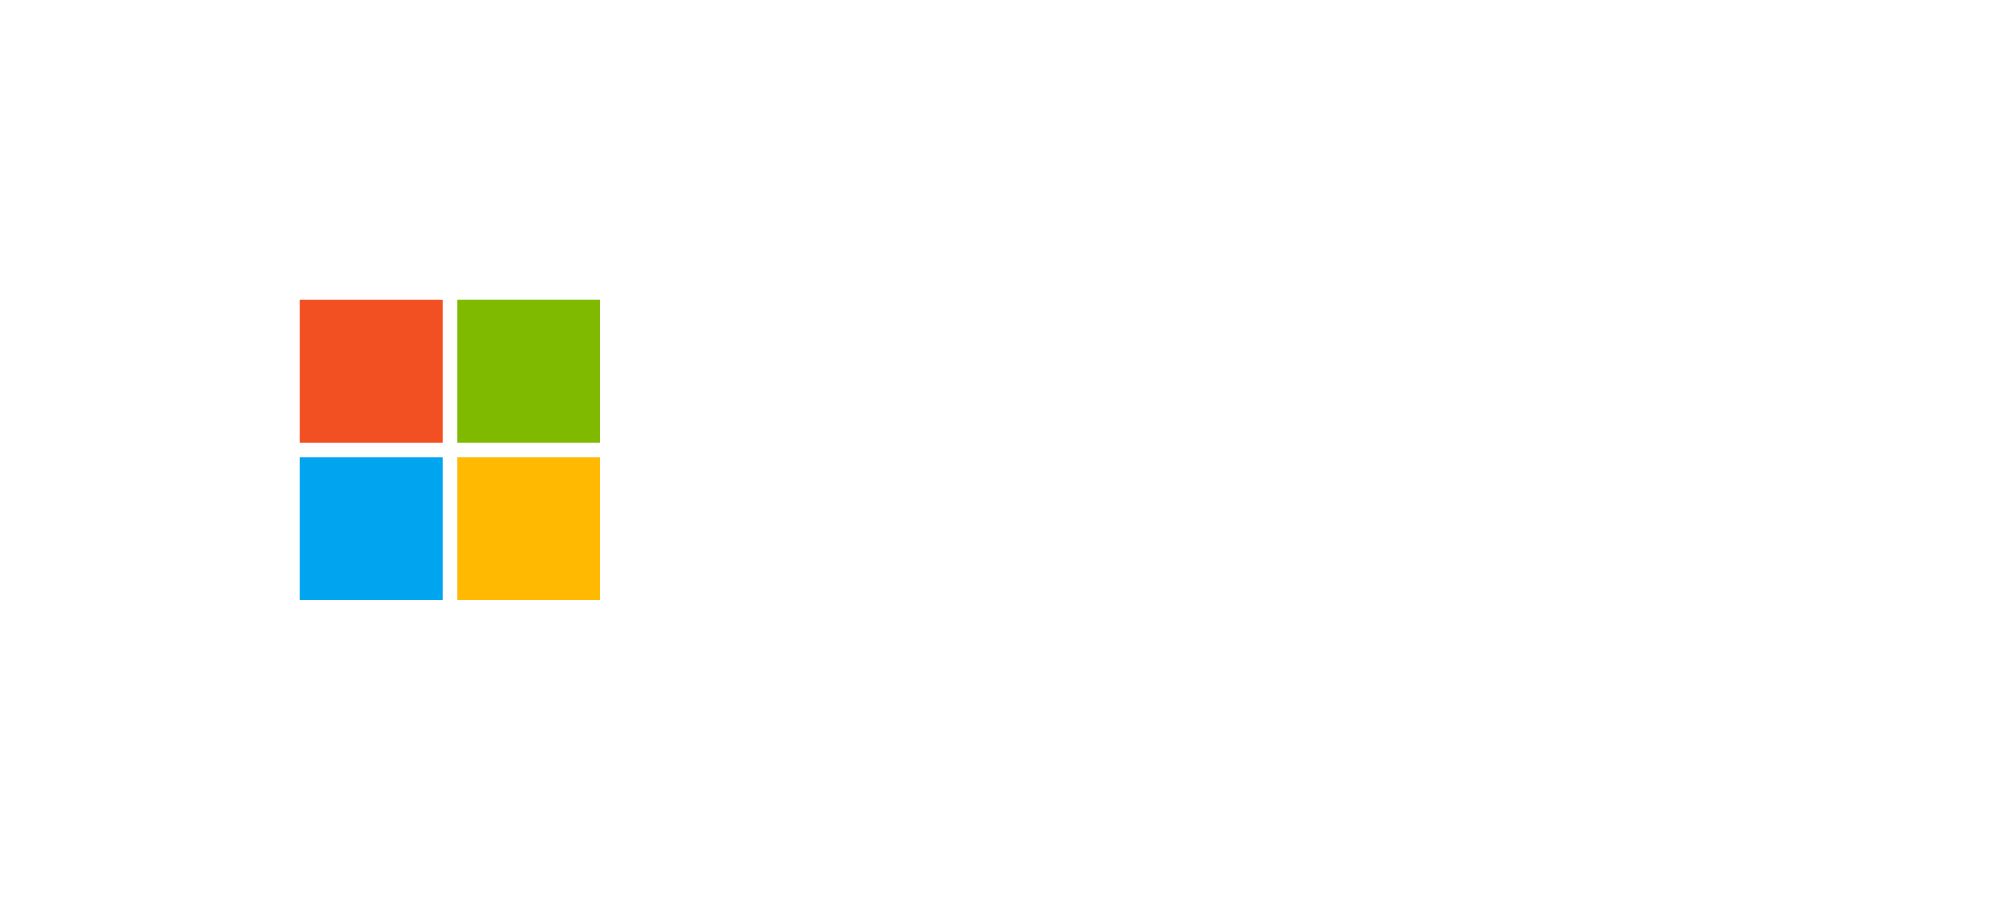 MicrosoftLogo